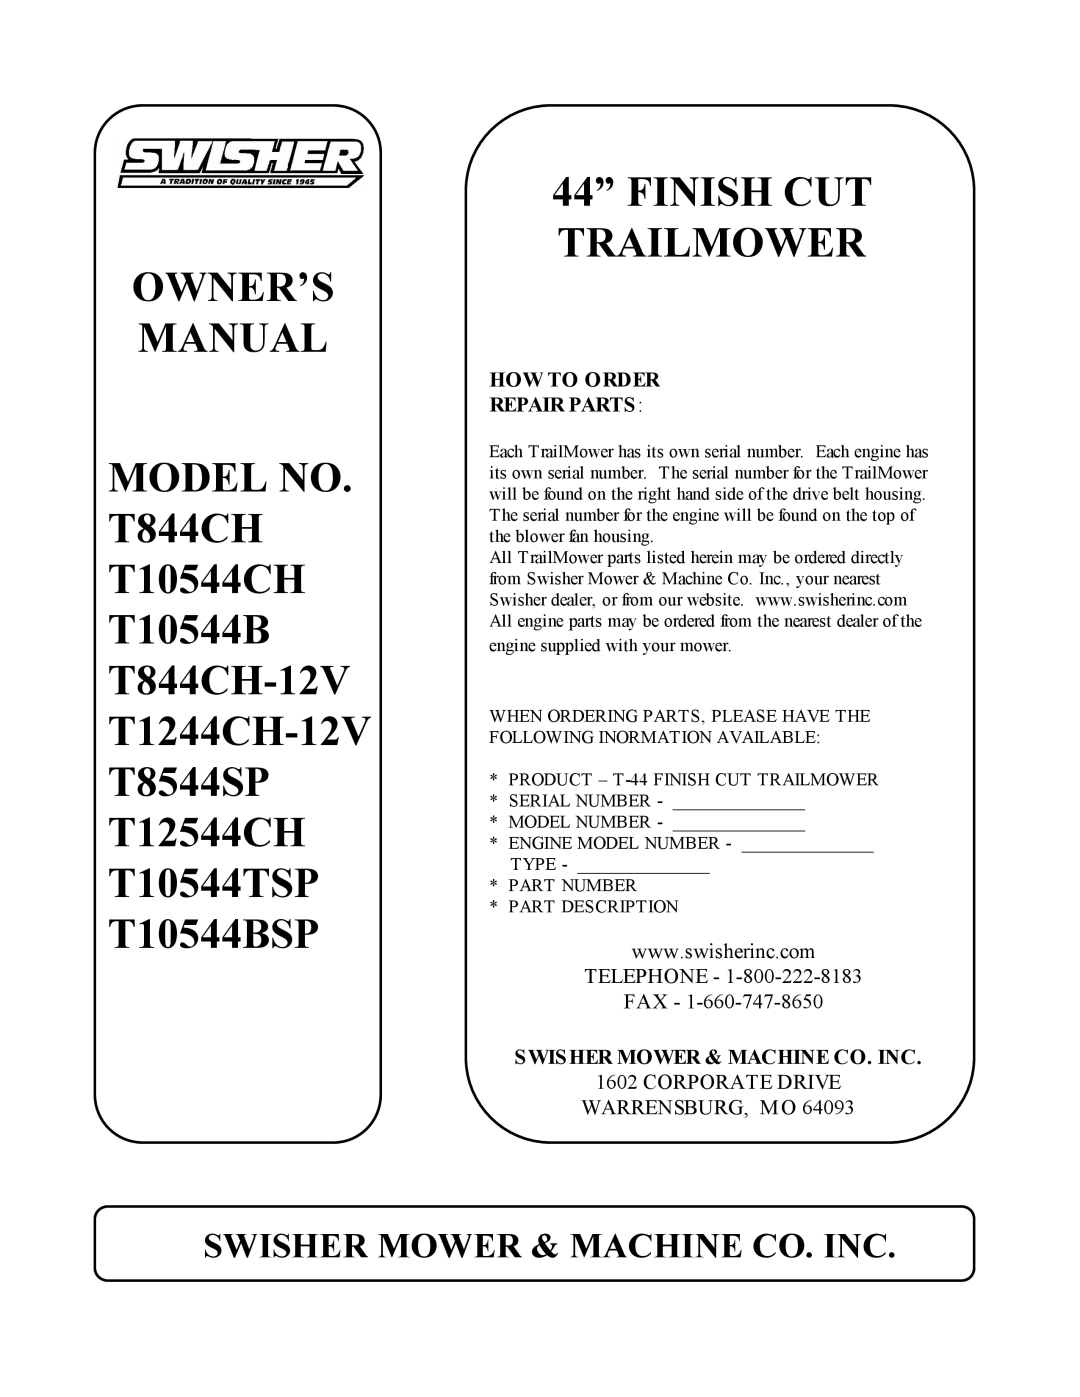 Swisher T12544CH 44” FINISH CUT TRAILMOWER, Swisher Mower & Machine Co. Inc, How To Order Repair Parts, Telephone Fax 